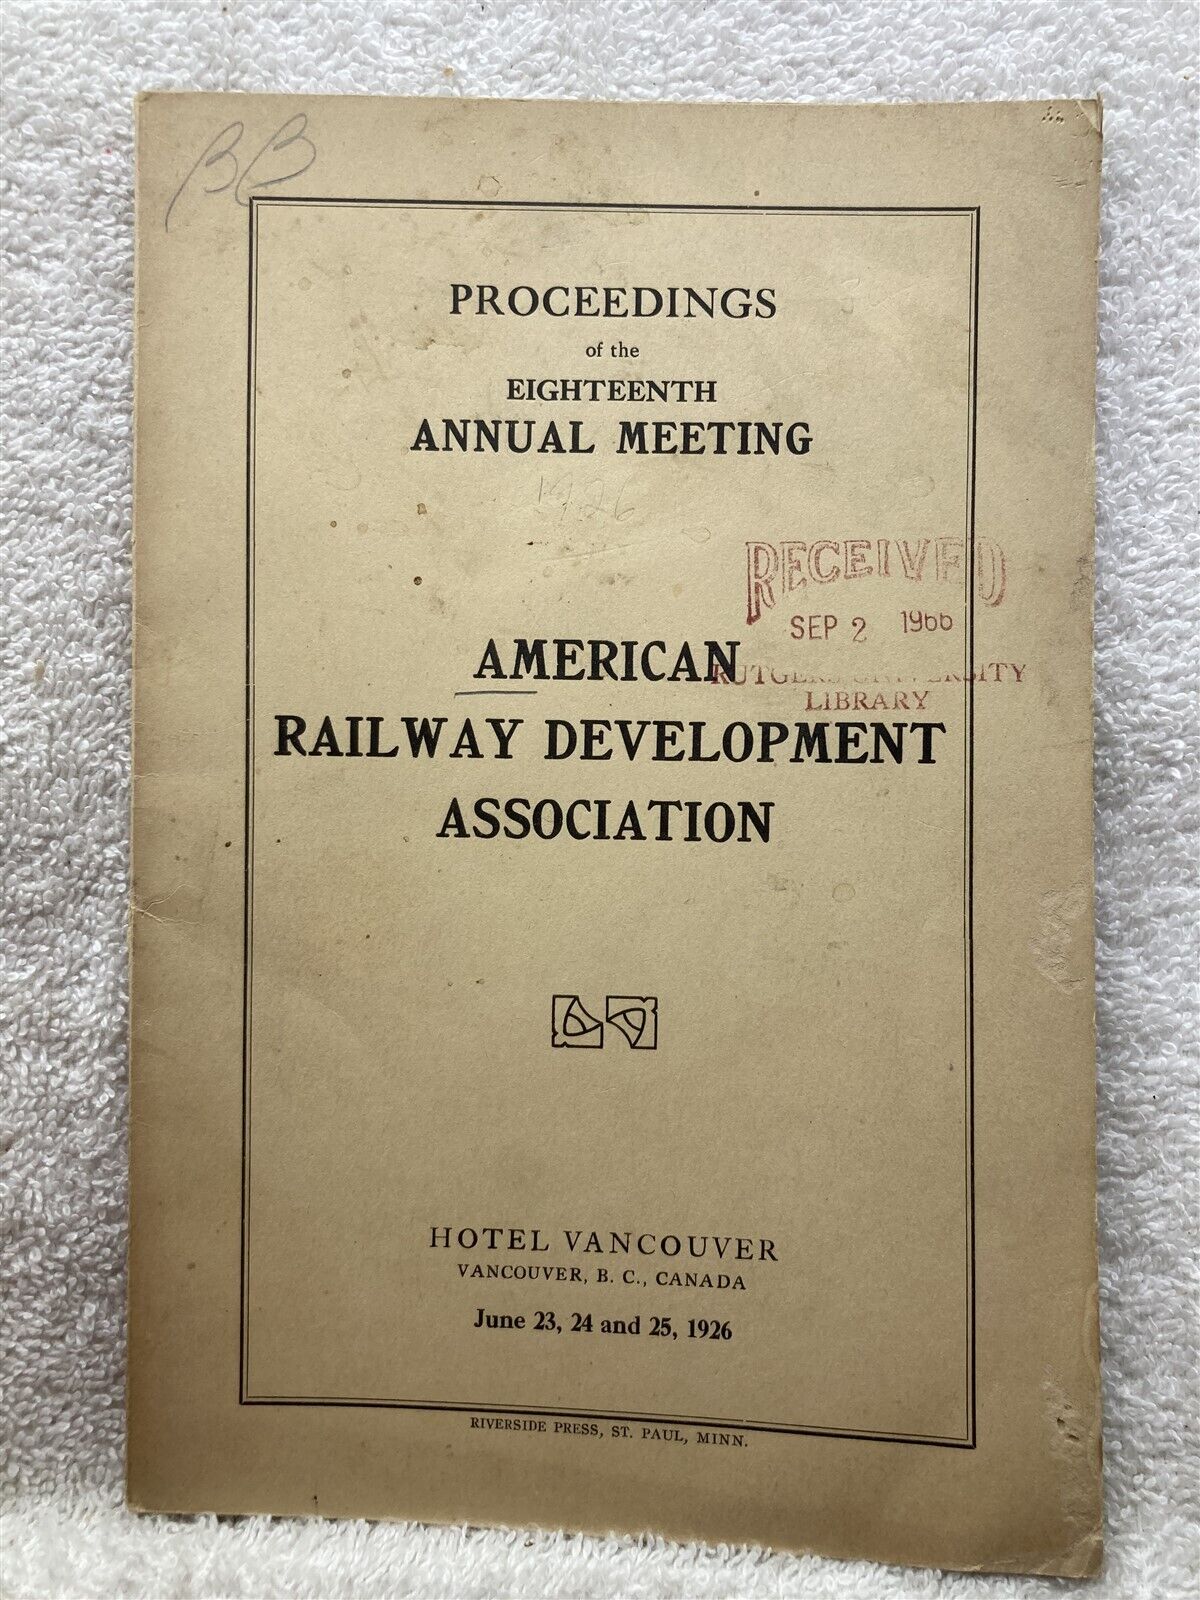 1926 American Railway Development Association Proceedings 18th Annual Meeting